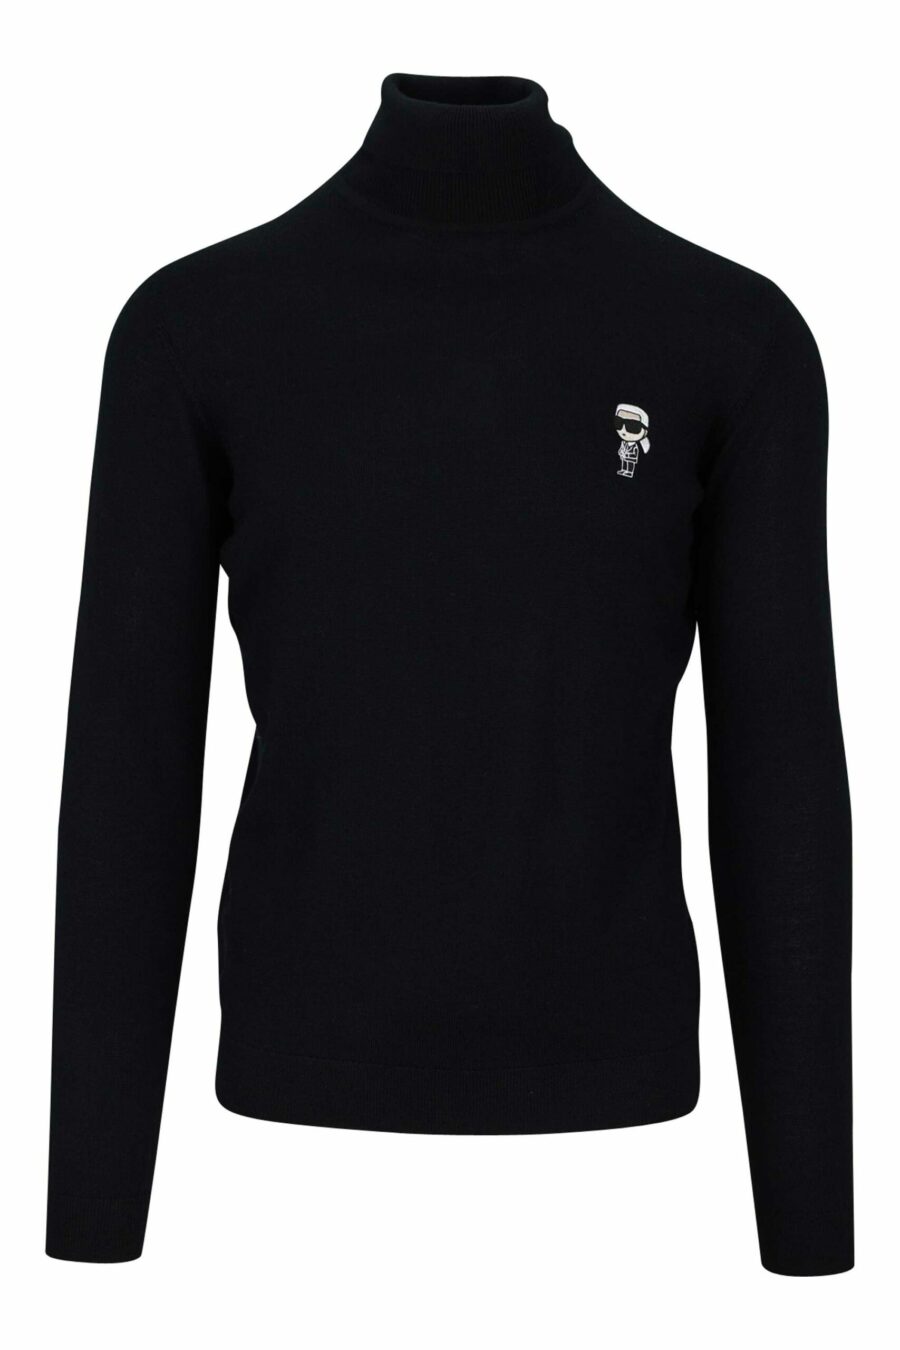 Black turtleneck jumper with embroidered mini-logo - 4062226637886 scaled